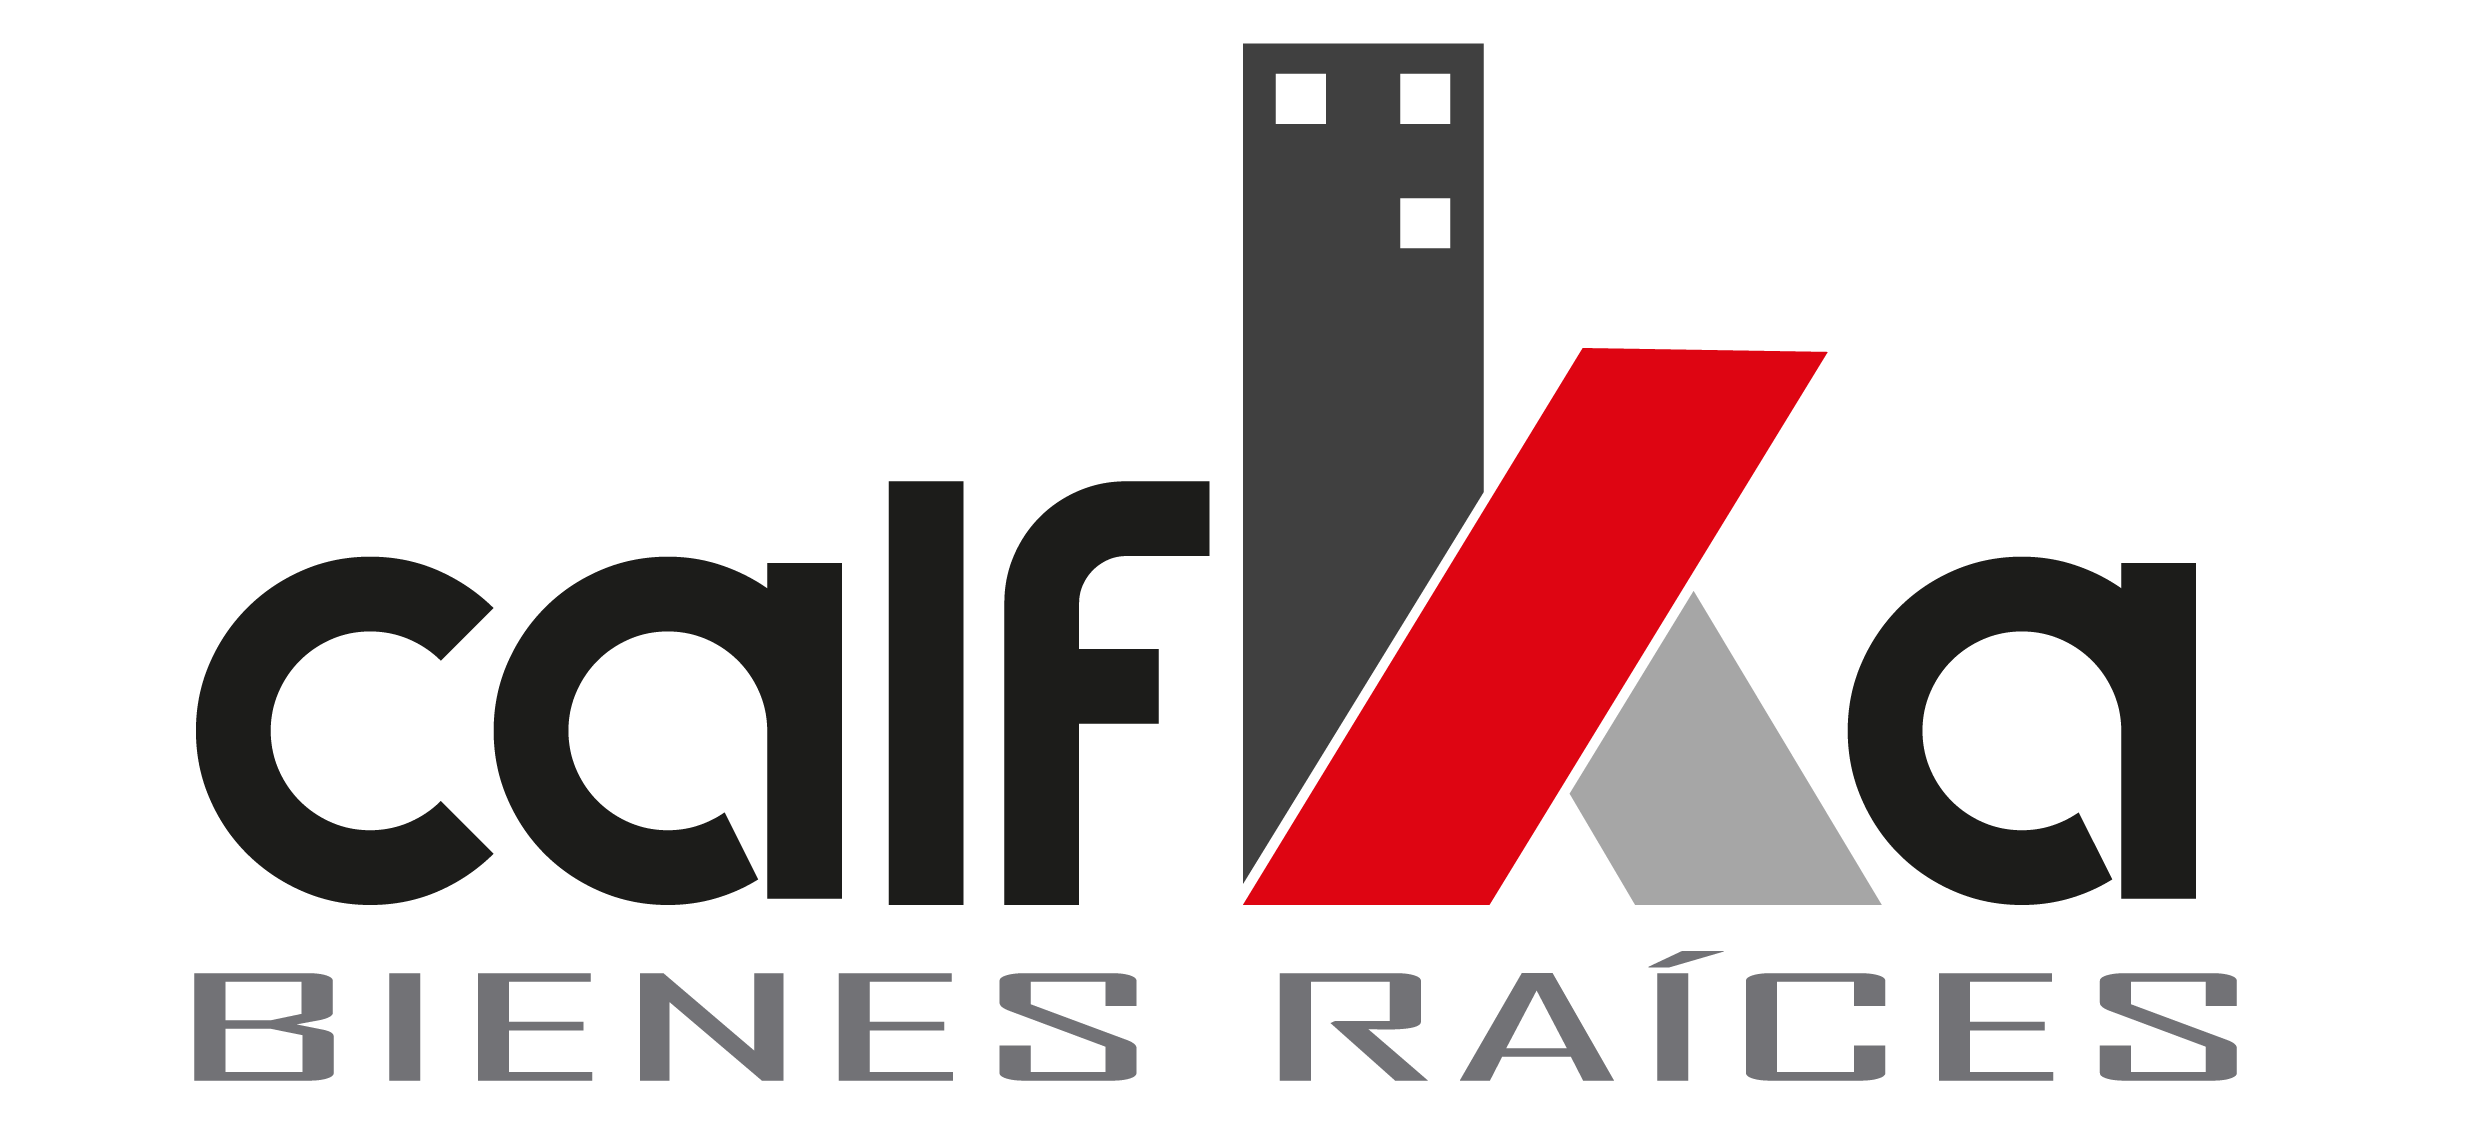 calfka-logo